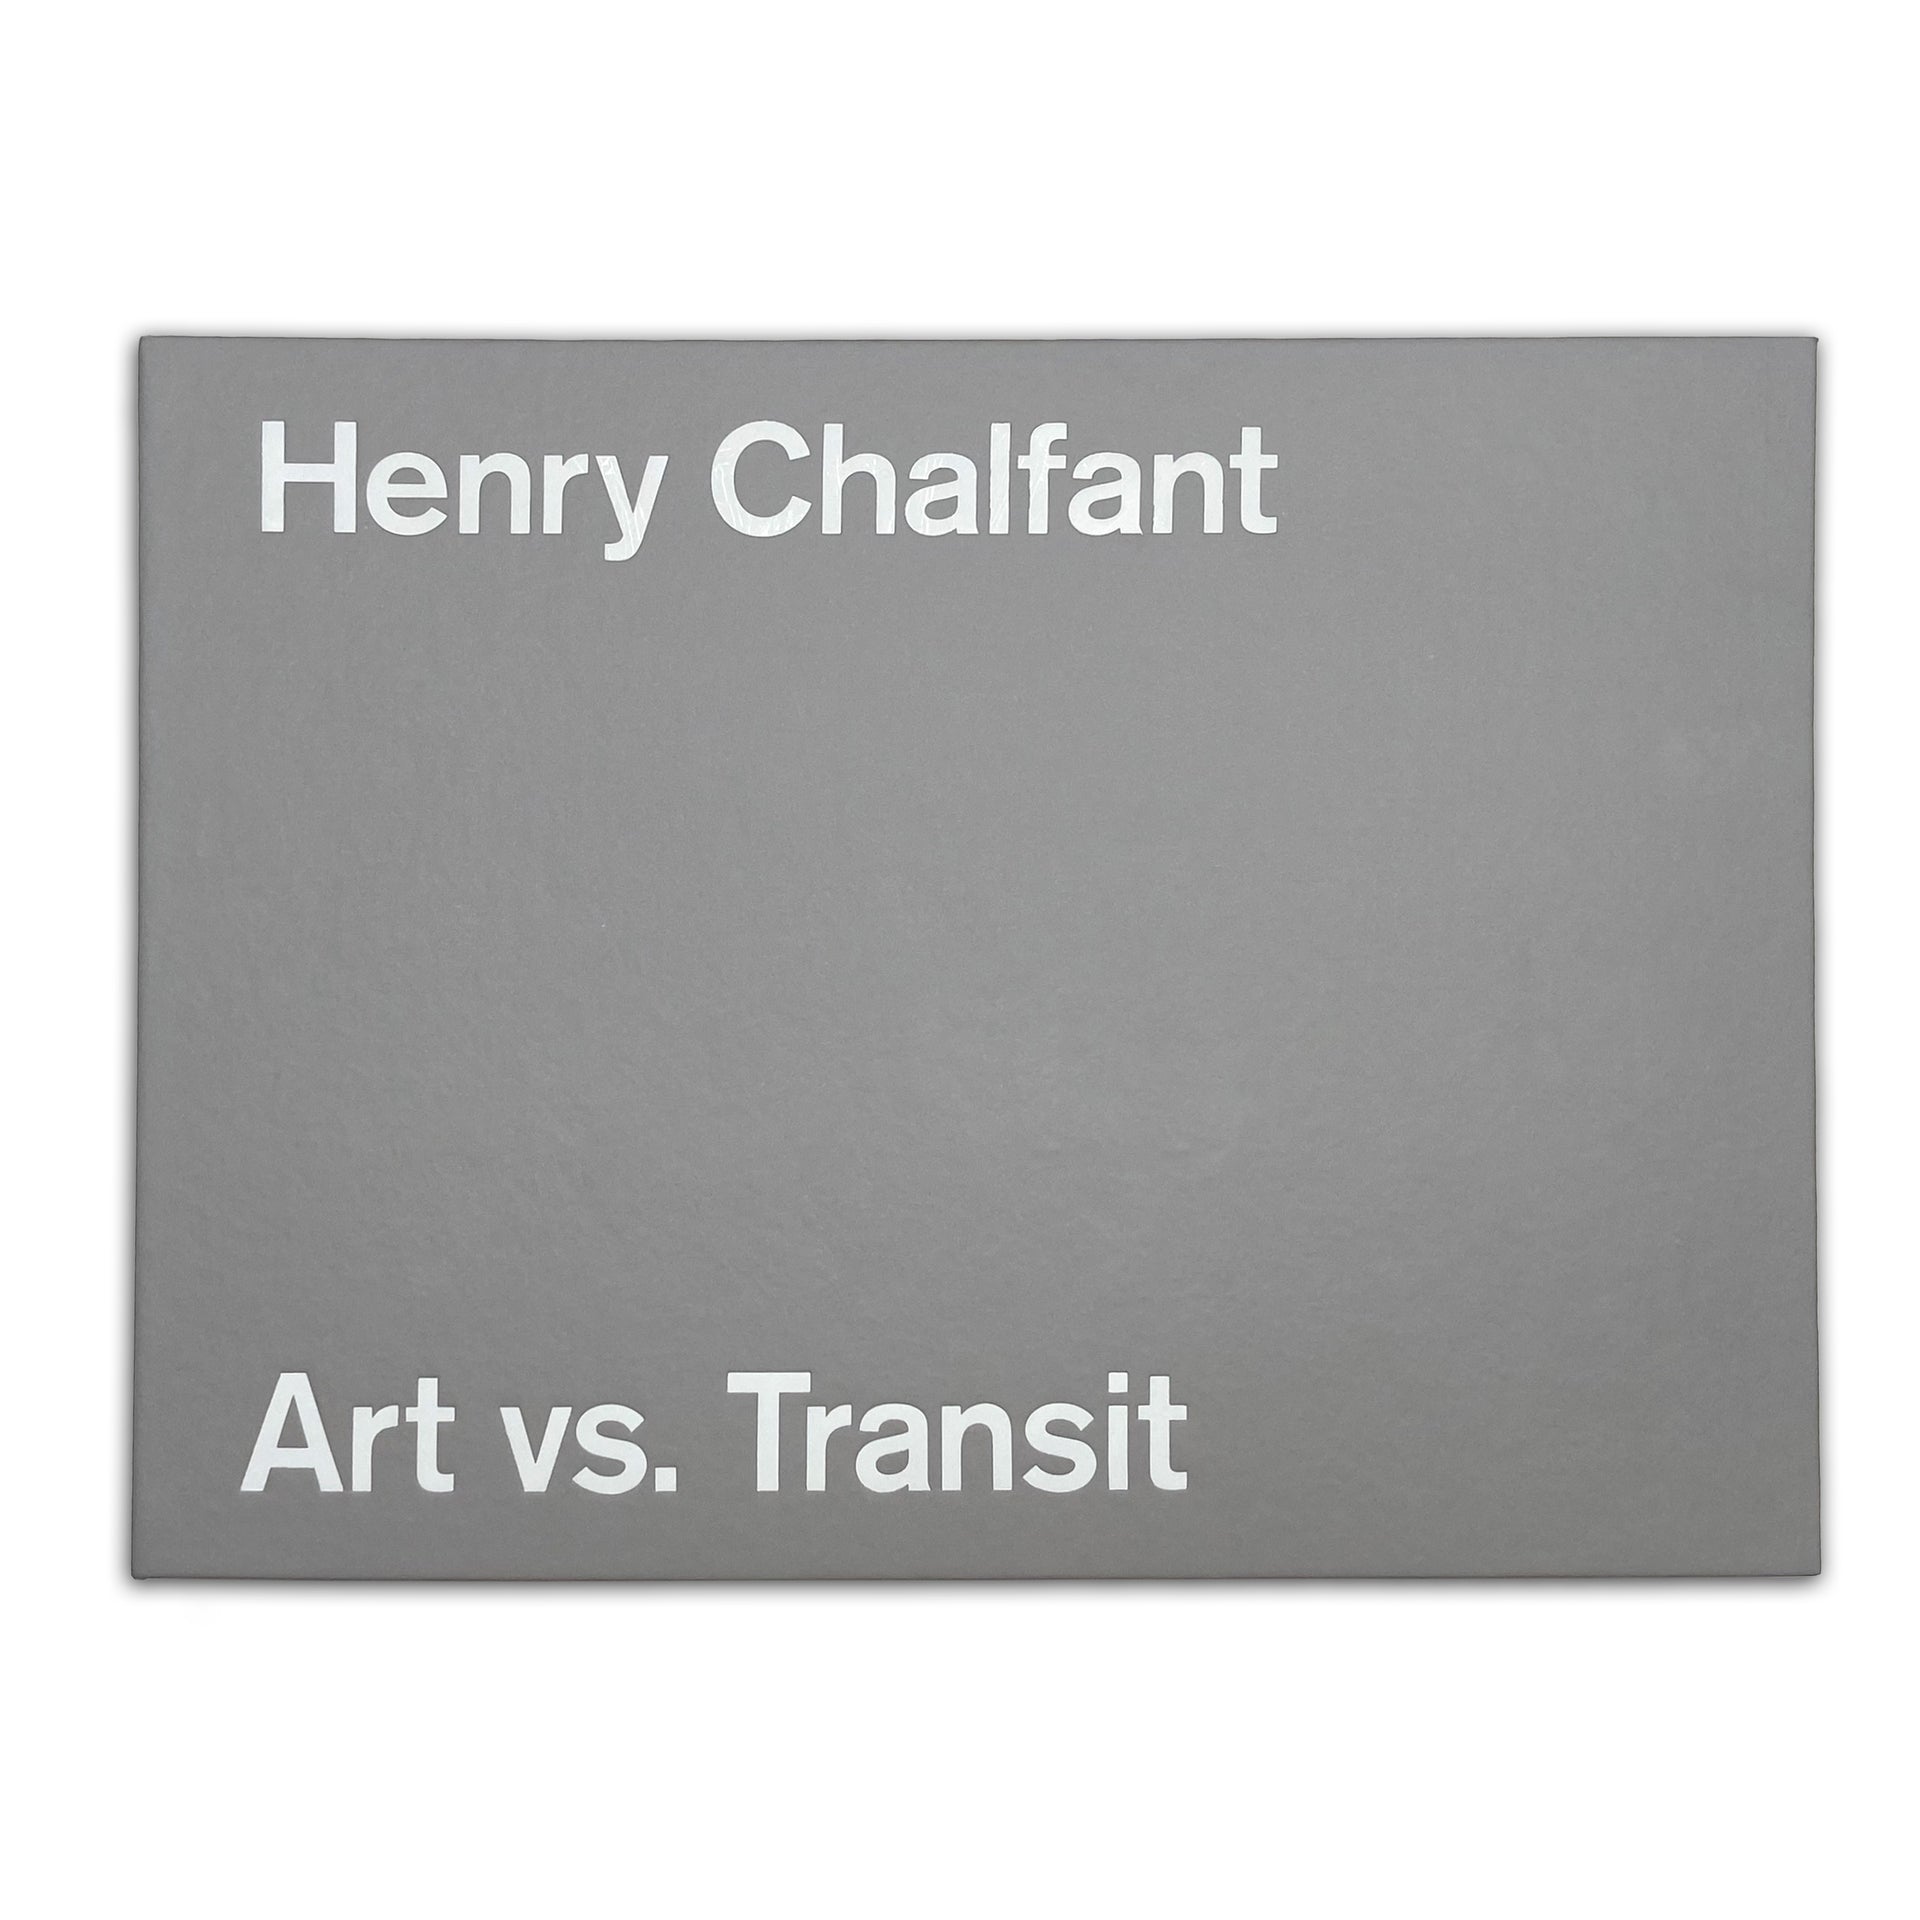 Henry Chalfant "Art Vs. Transit" Book